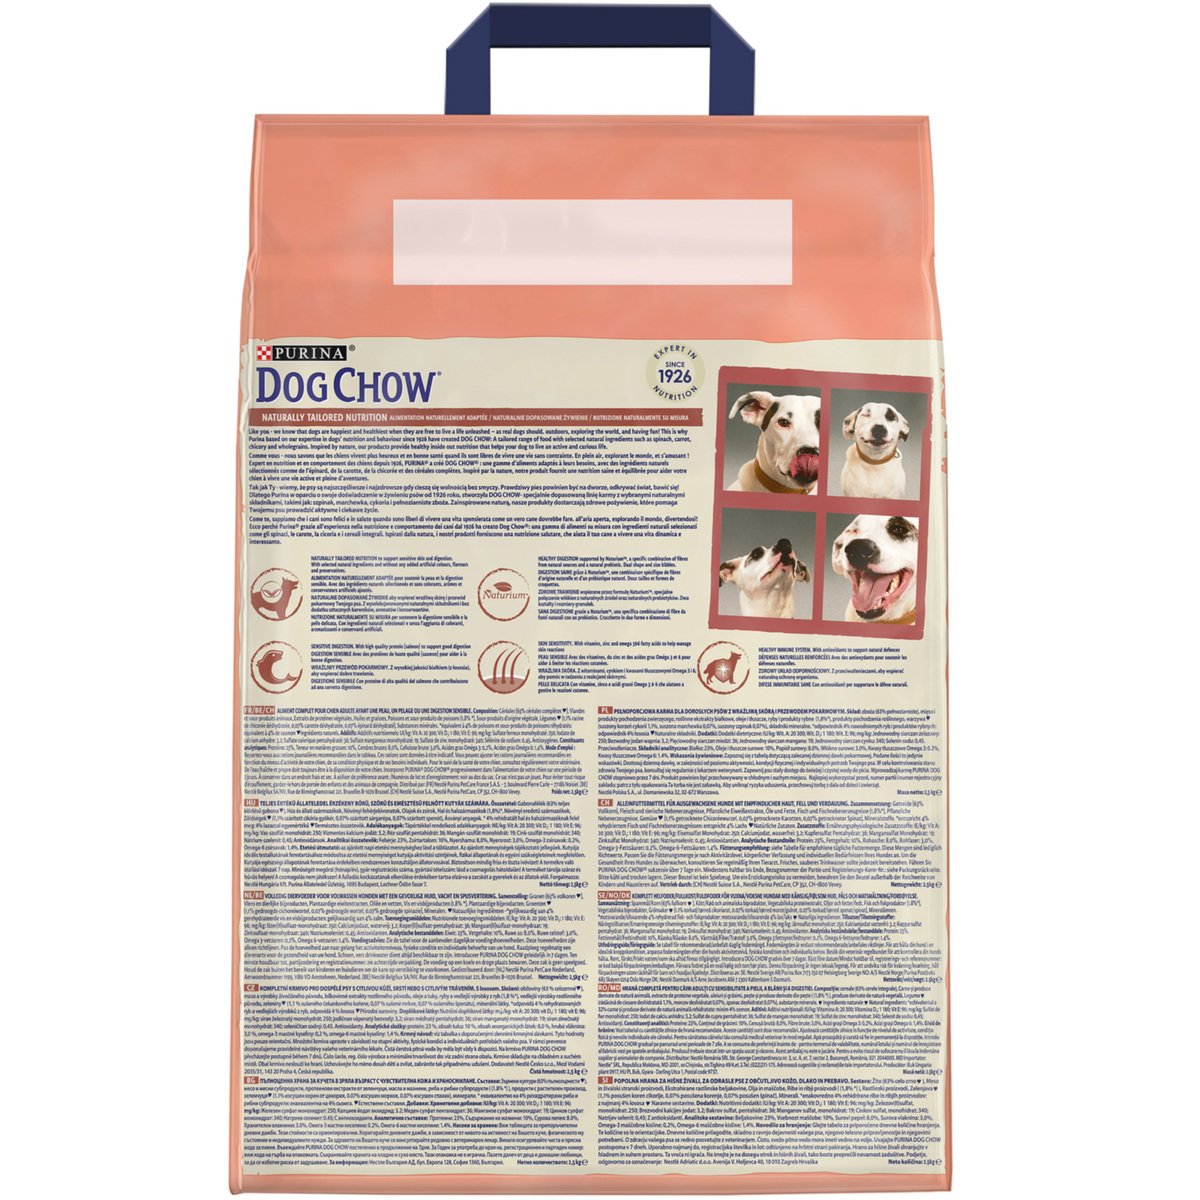 Purina Dog Chow Sensitive with Salmon Dry Dog Food 2.5 kg